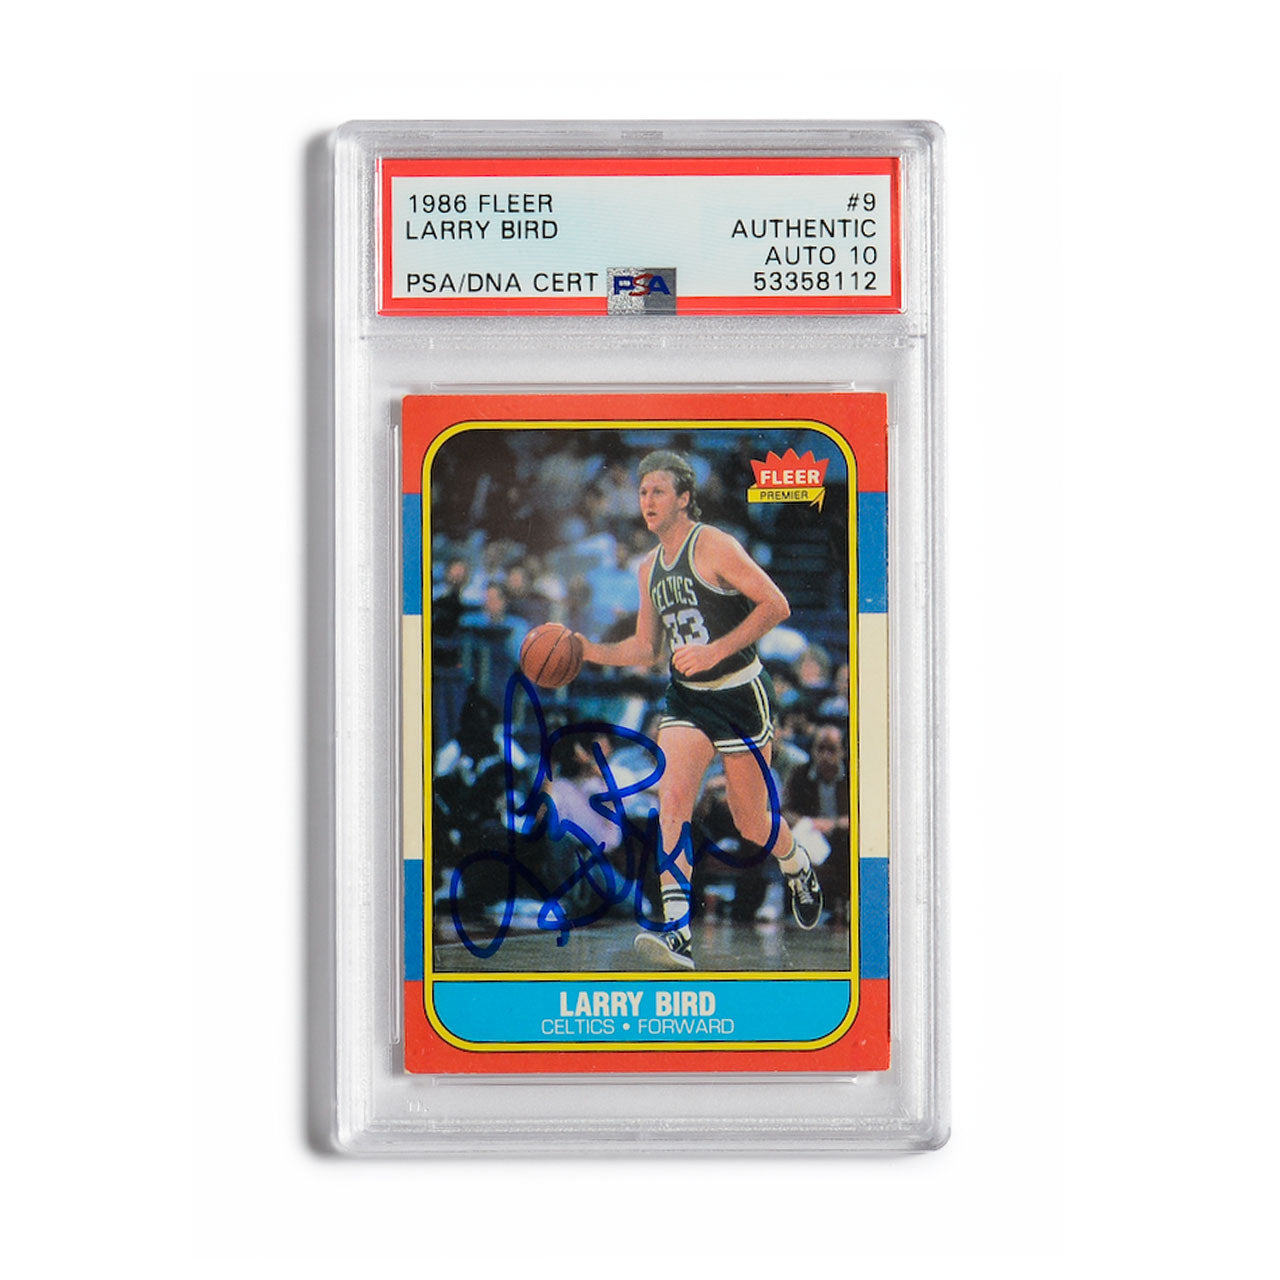 1986 Fleer Larry Bird Autographed Basketball Card